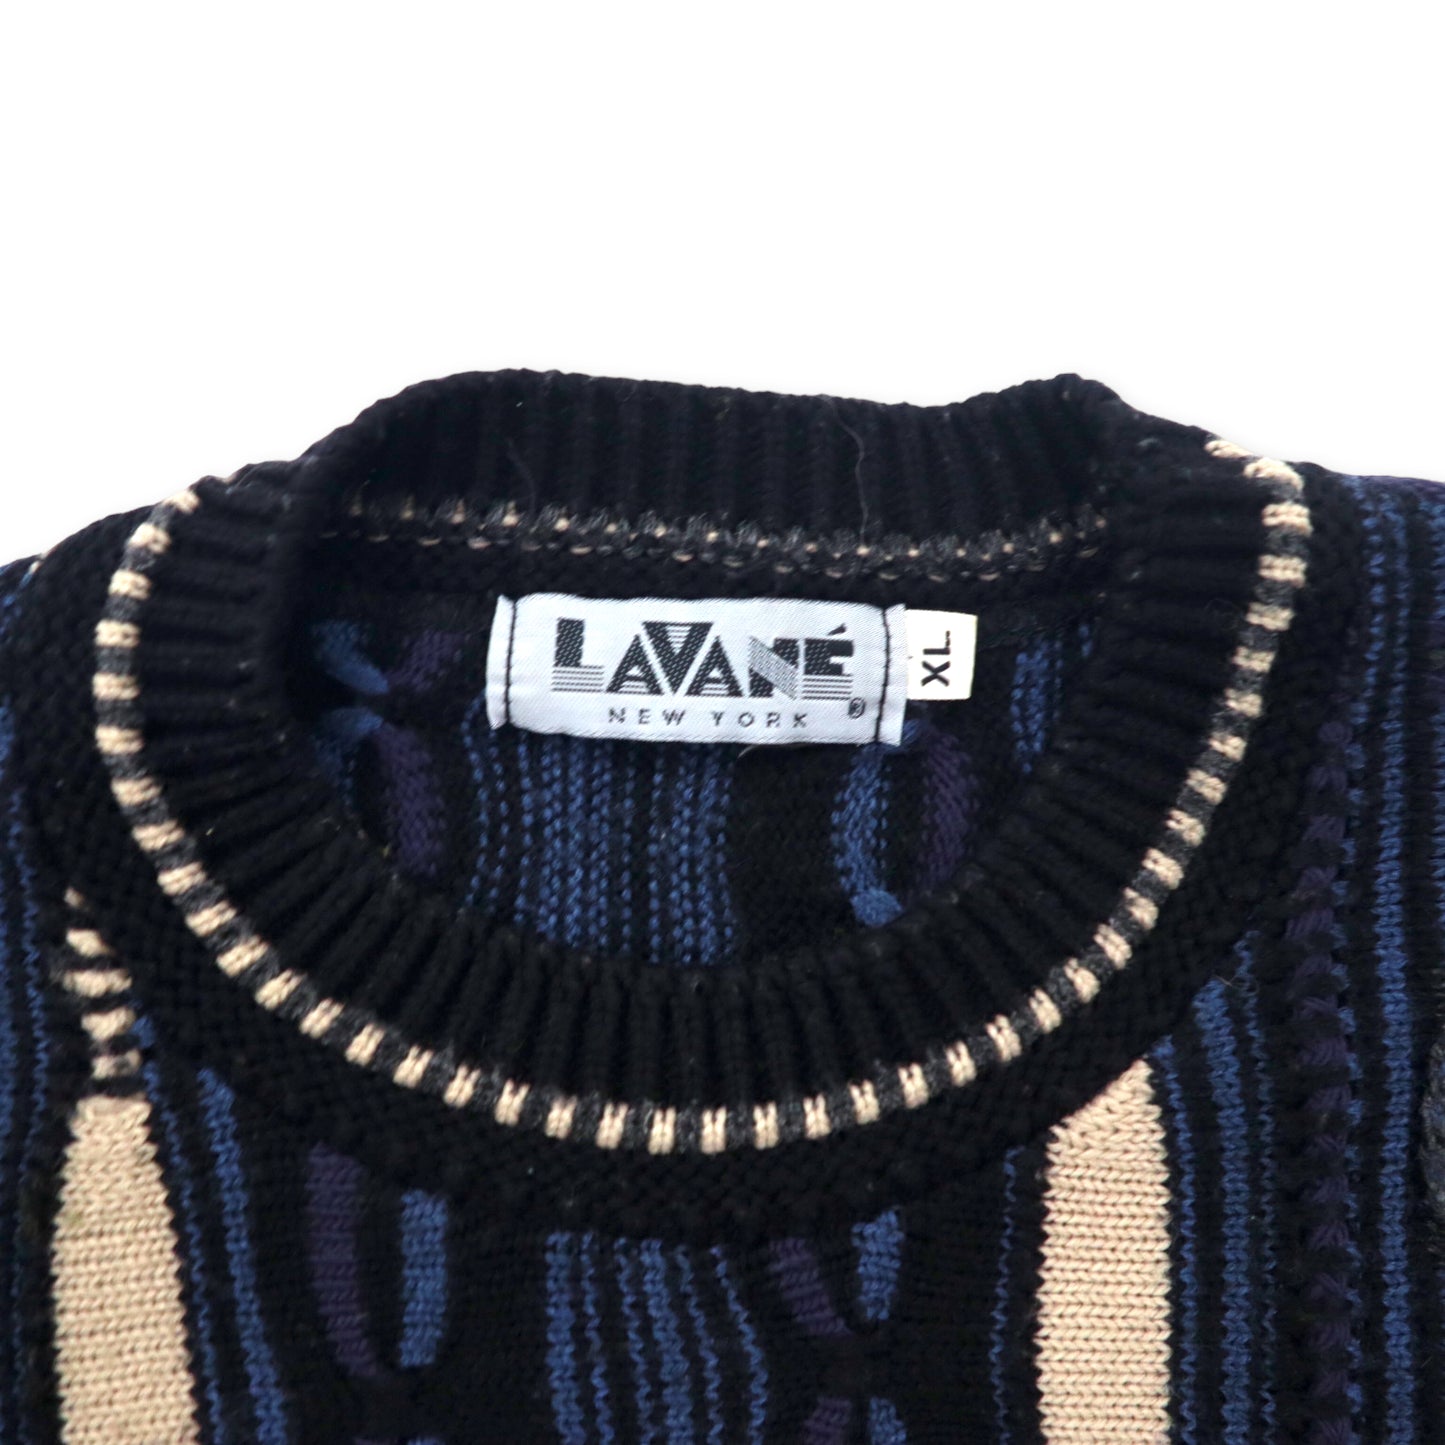 Lavane USA MADE 90s 3D Knit Sweater XL Black Acrylic Patterned Big